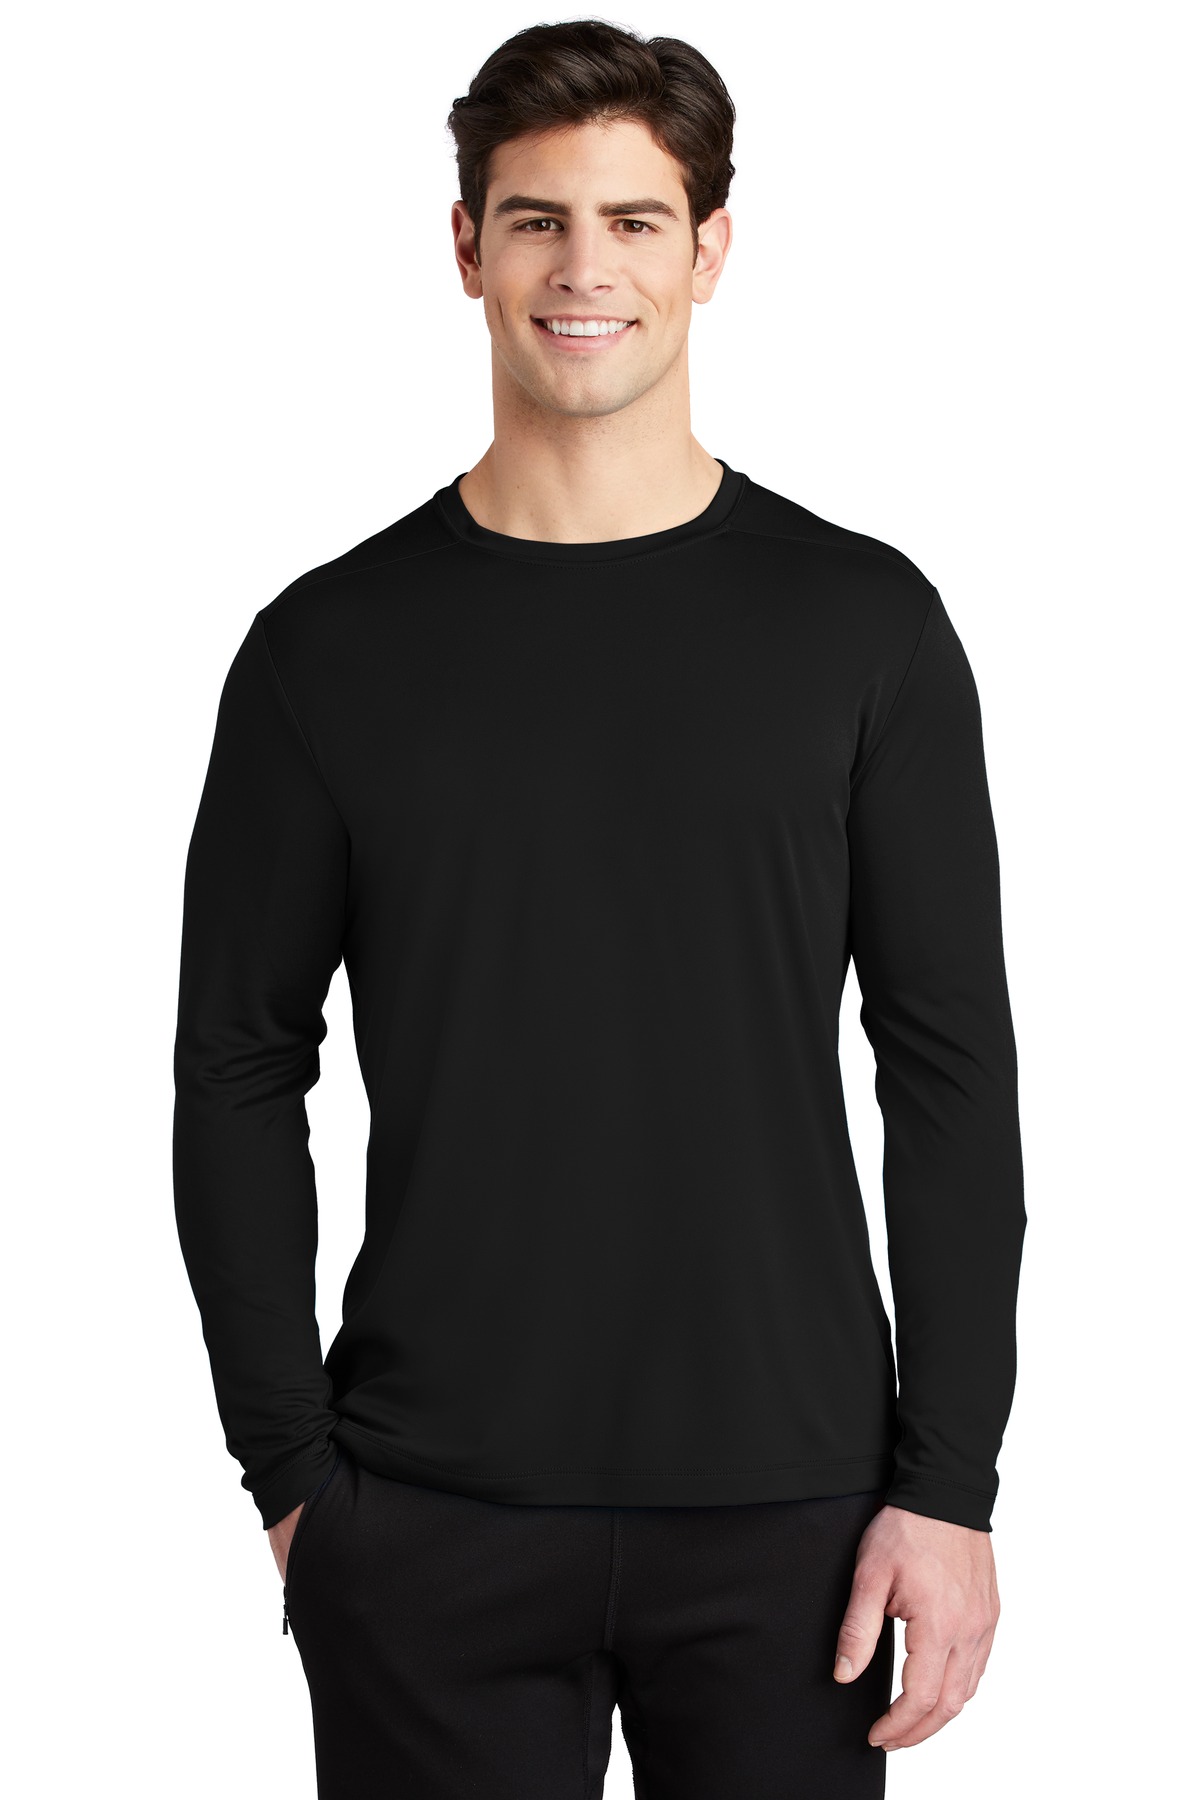 Sport-Tek Activewear T-Shirts for Hospitality ® Posi-UV Pro Long Sleeve Tee.-Sport-Tek